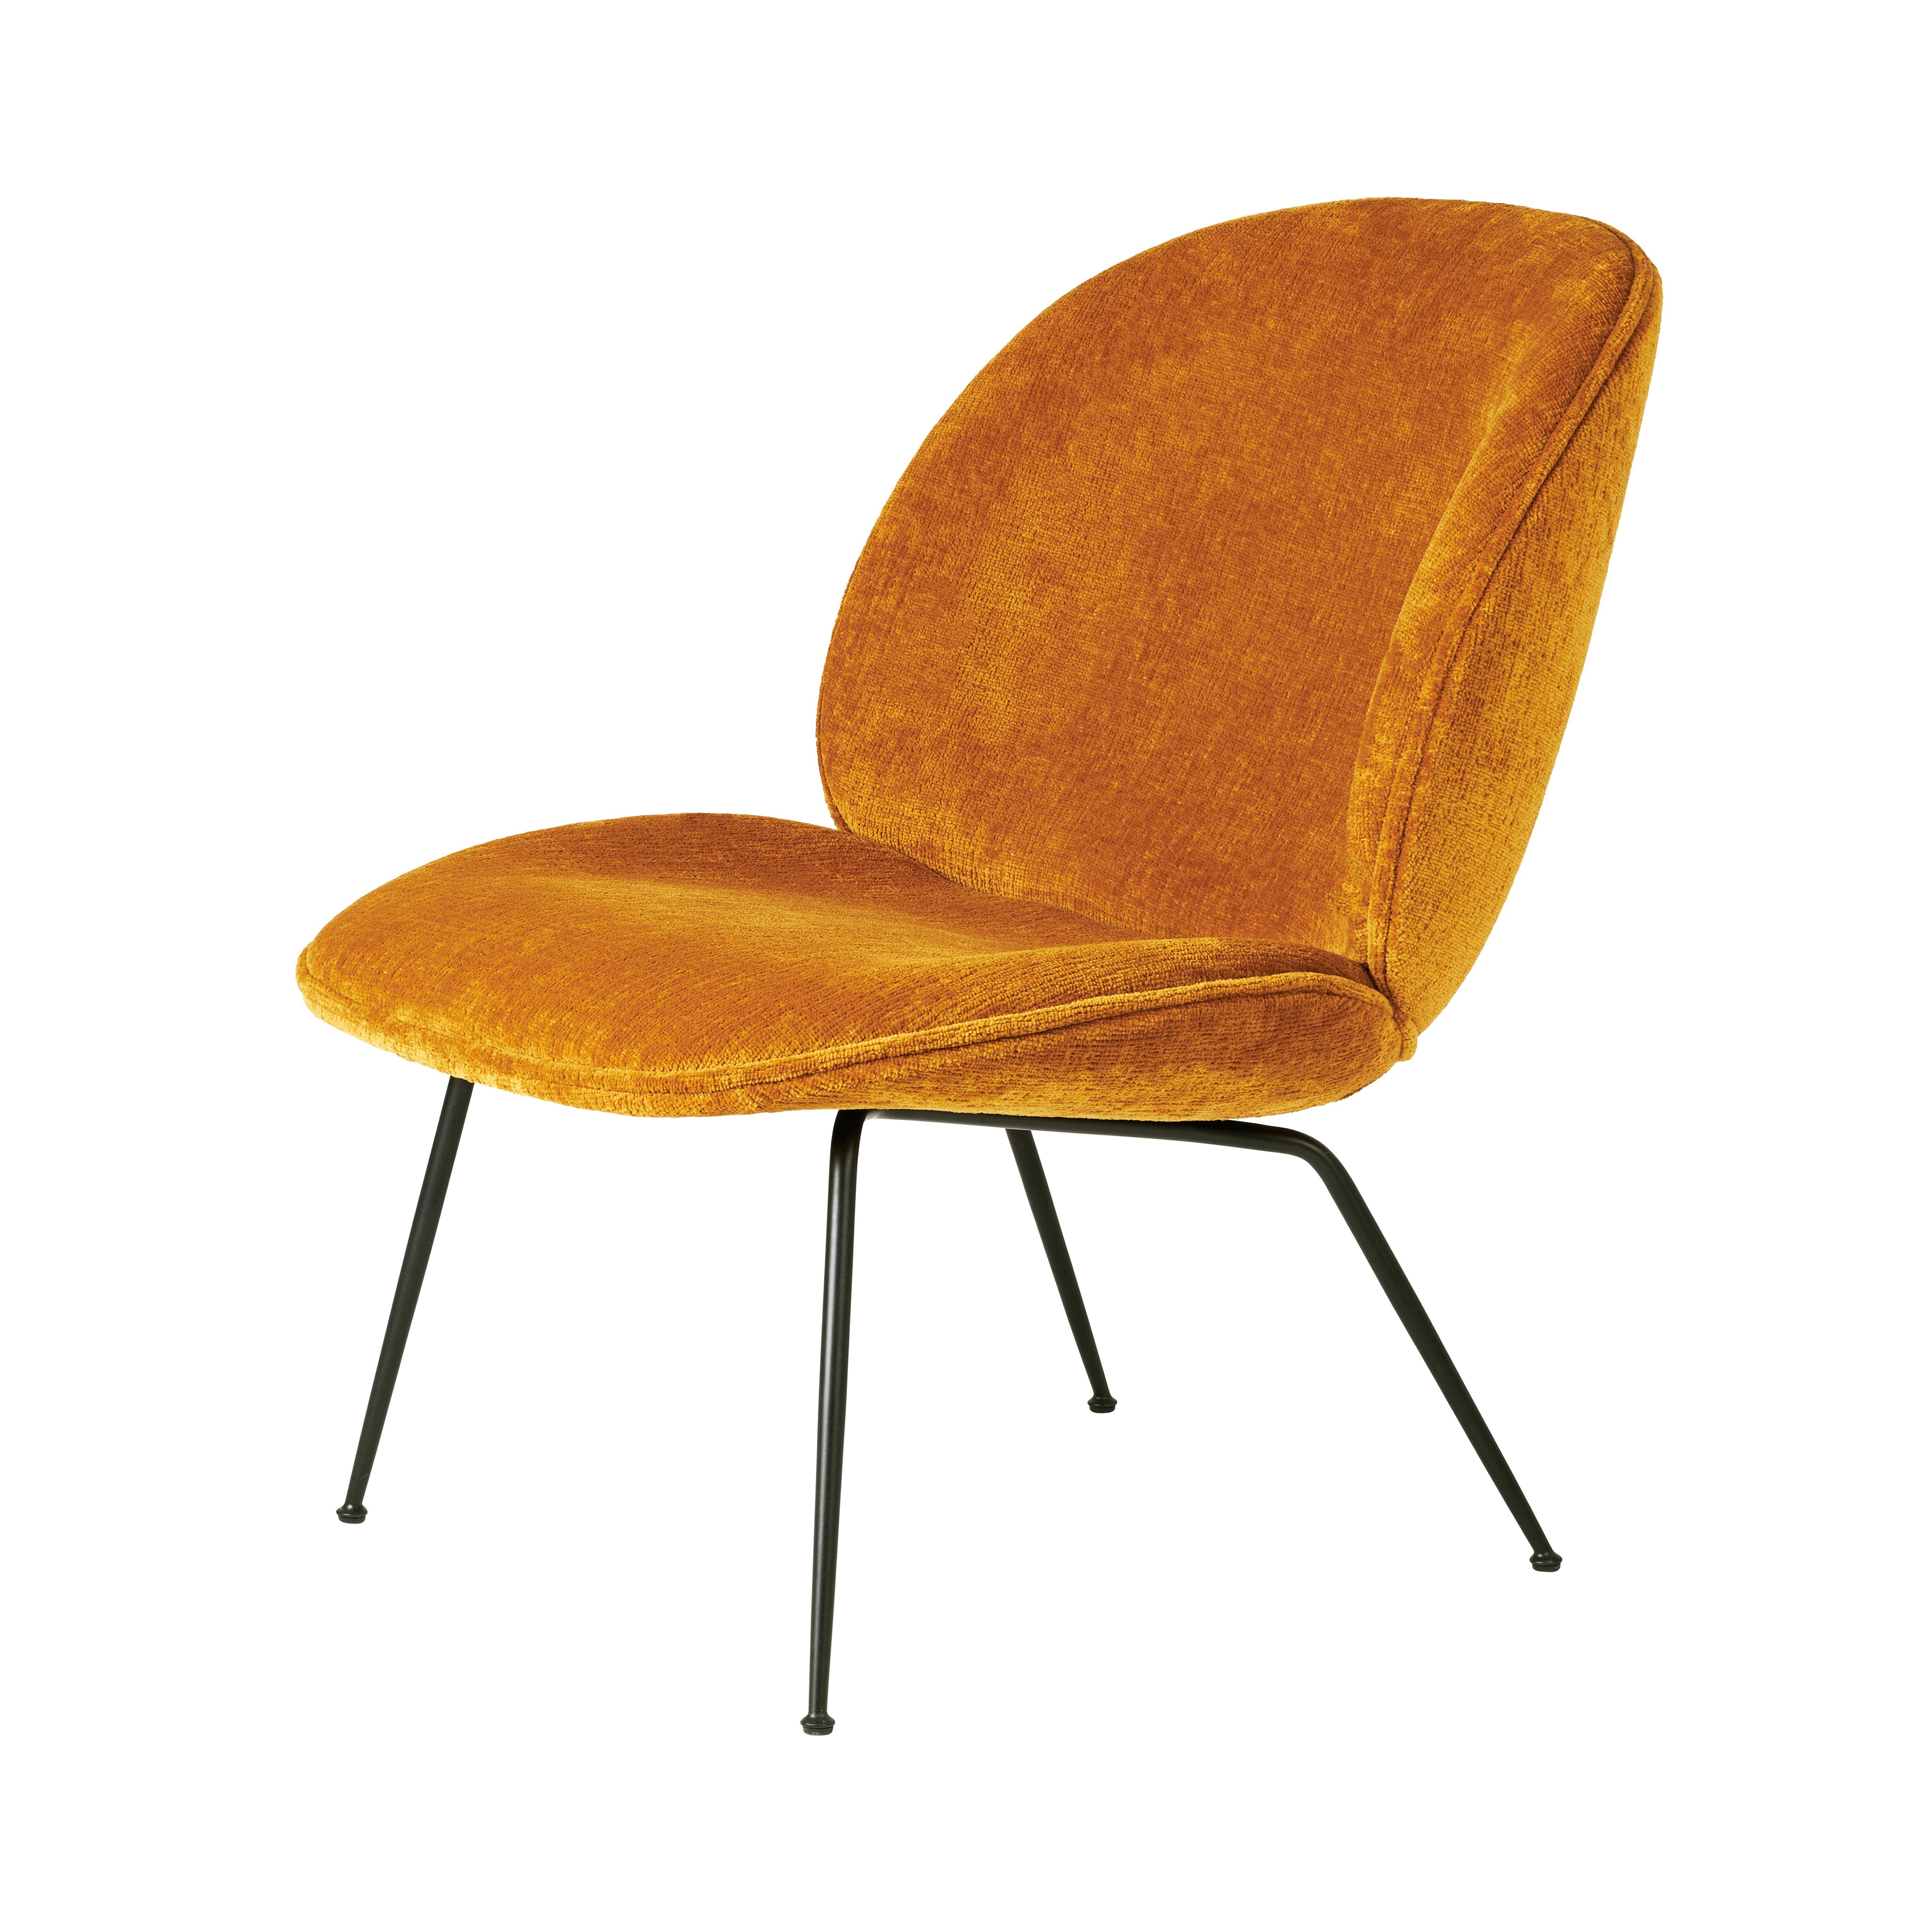 Beetle Lounge Chair: Conic Base + Full Upholstery + Black Matt